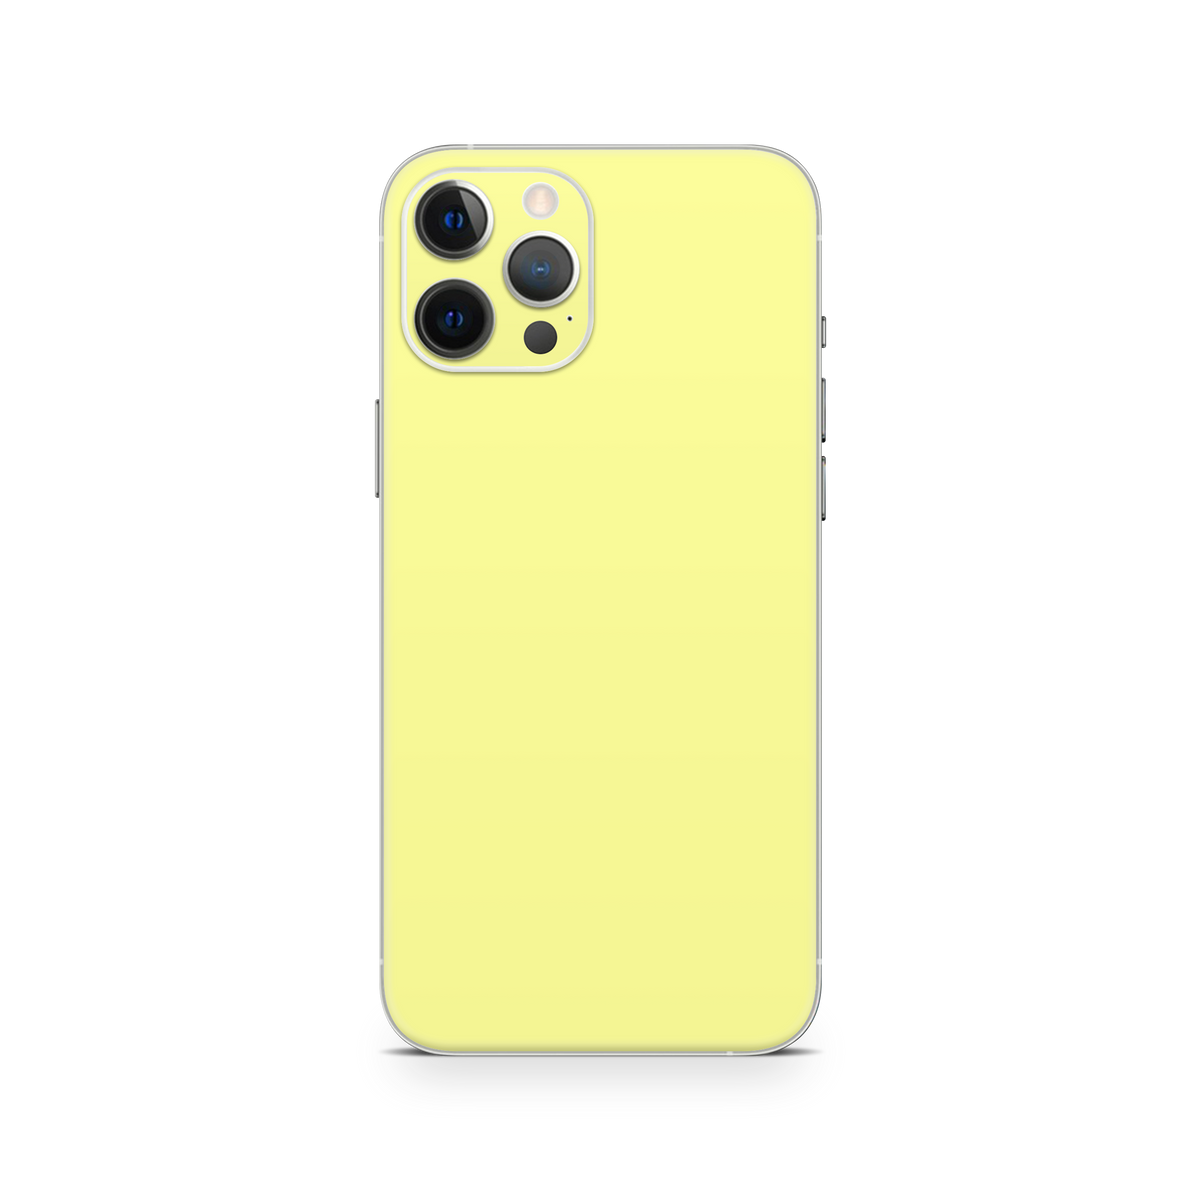 Apple iPhone 12 Pro max Pale Yellow Skin